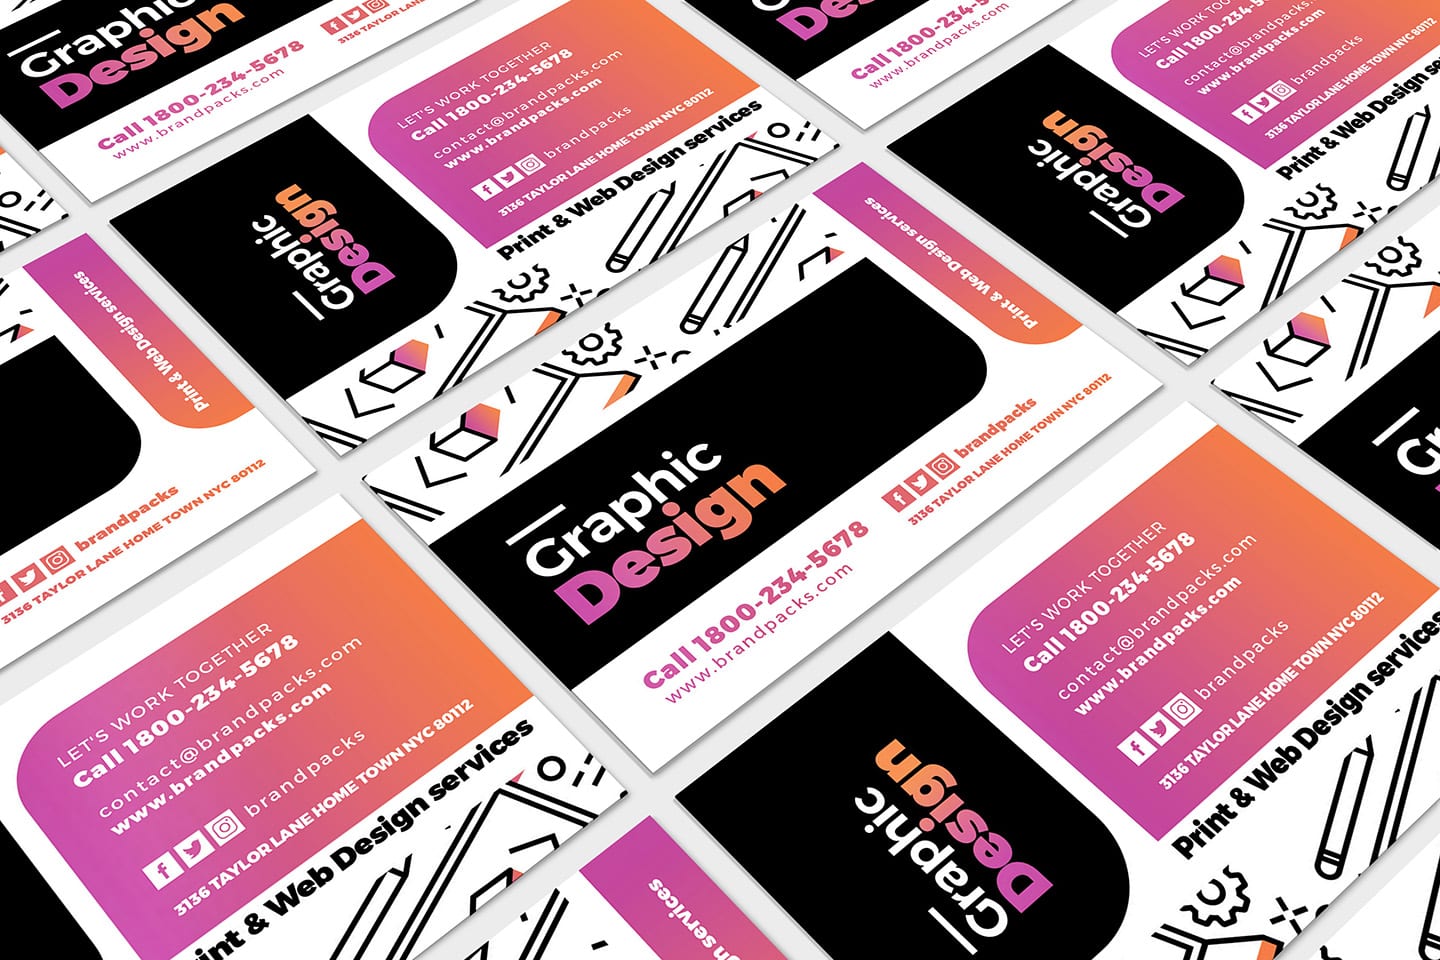 Web Design Business Cards Templates - Professional Sample Template